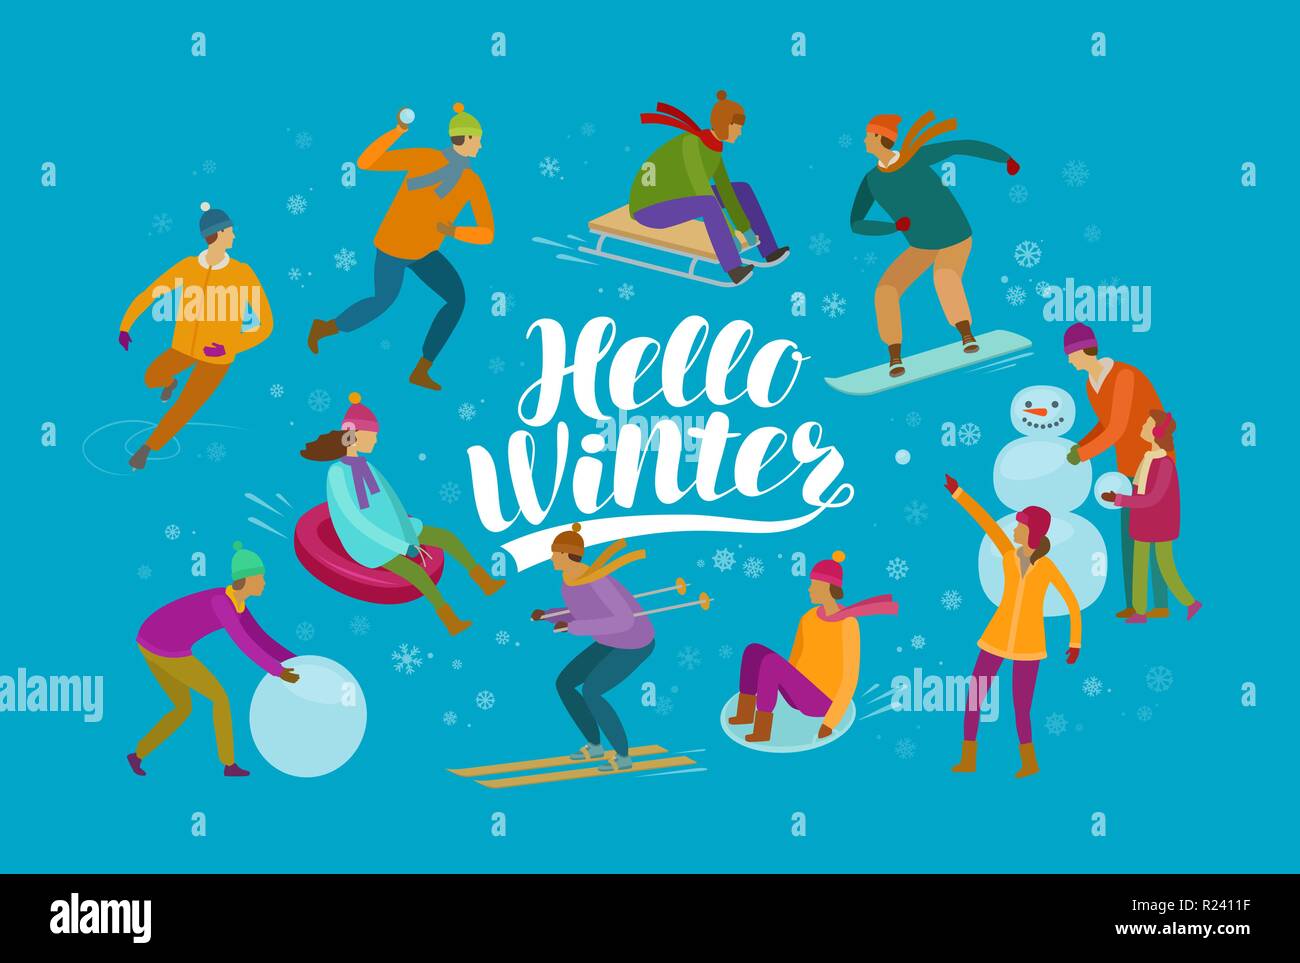 Hello winter, banner. Winter fun and activities concept. Vector illustration Stock Vector